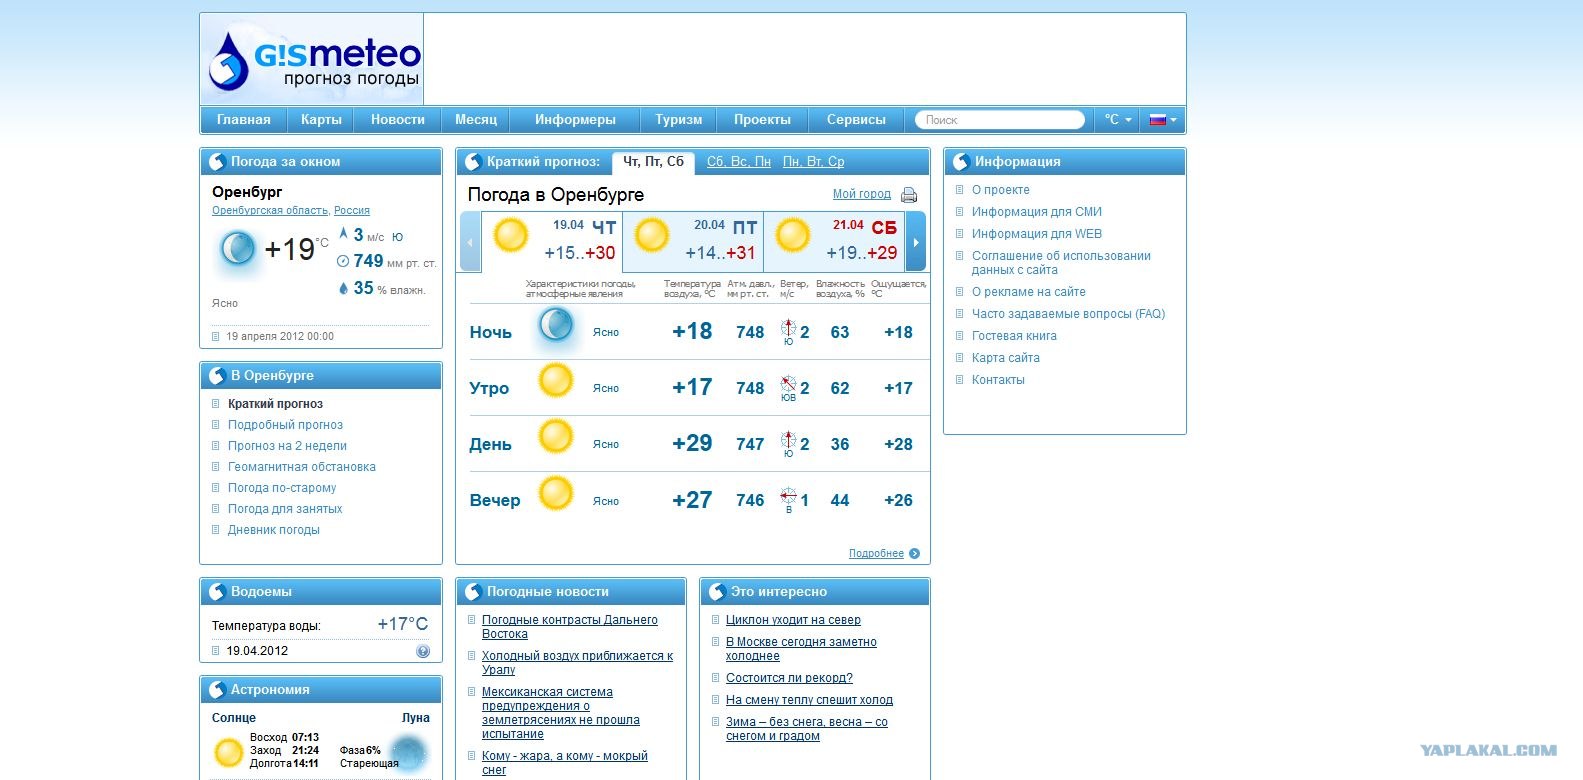 Погода оренбург завтра точная по часам. Погода в Оренбурге. Прогноз погоды в Оренбурге. Гисметео Оренбург. Погода в Оренбурге на сегодня.